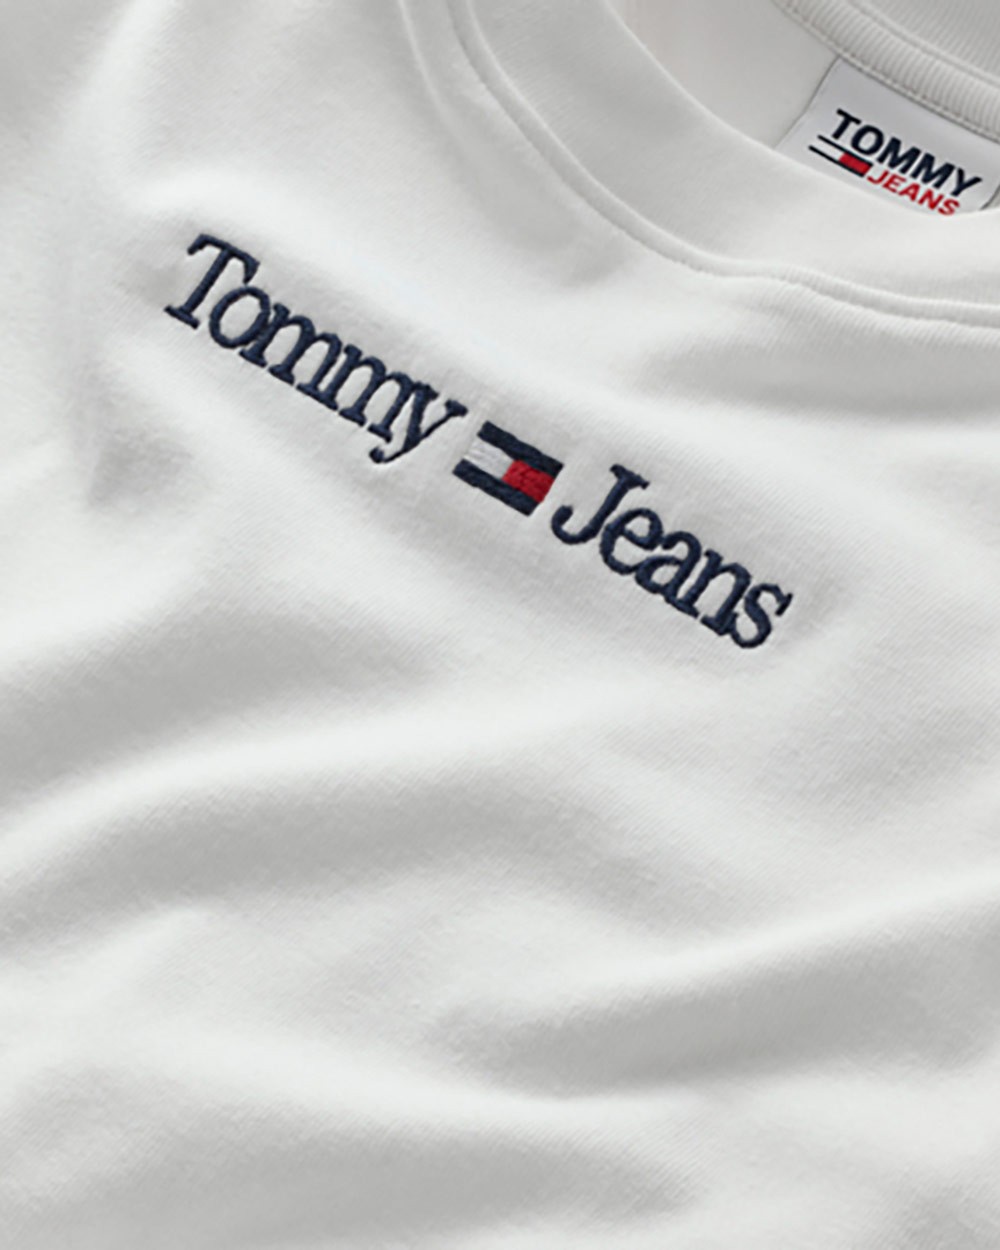 TOMMY HILFIGER DW0DW14364 - T-shirt